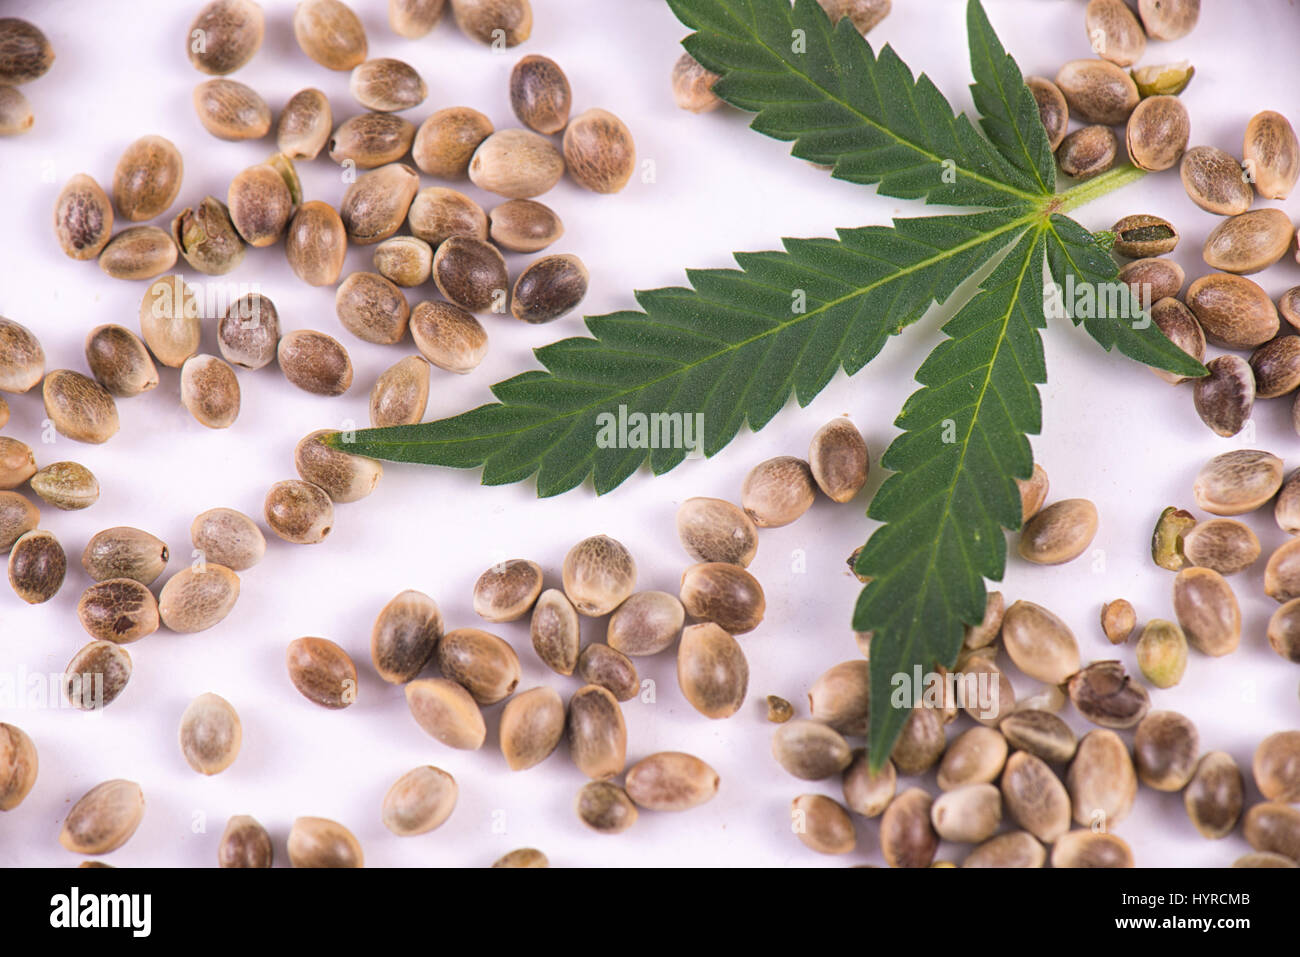 Cannabis marihuana Cannabis samen Blatt Hand Stockfotografie - Alamy